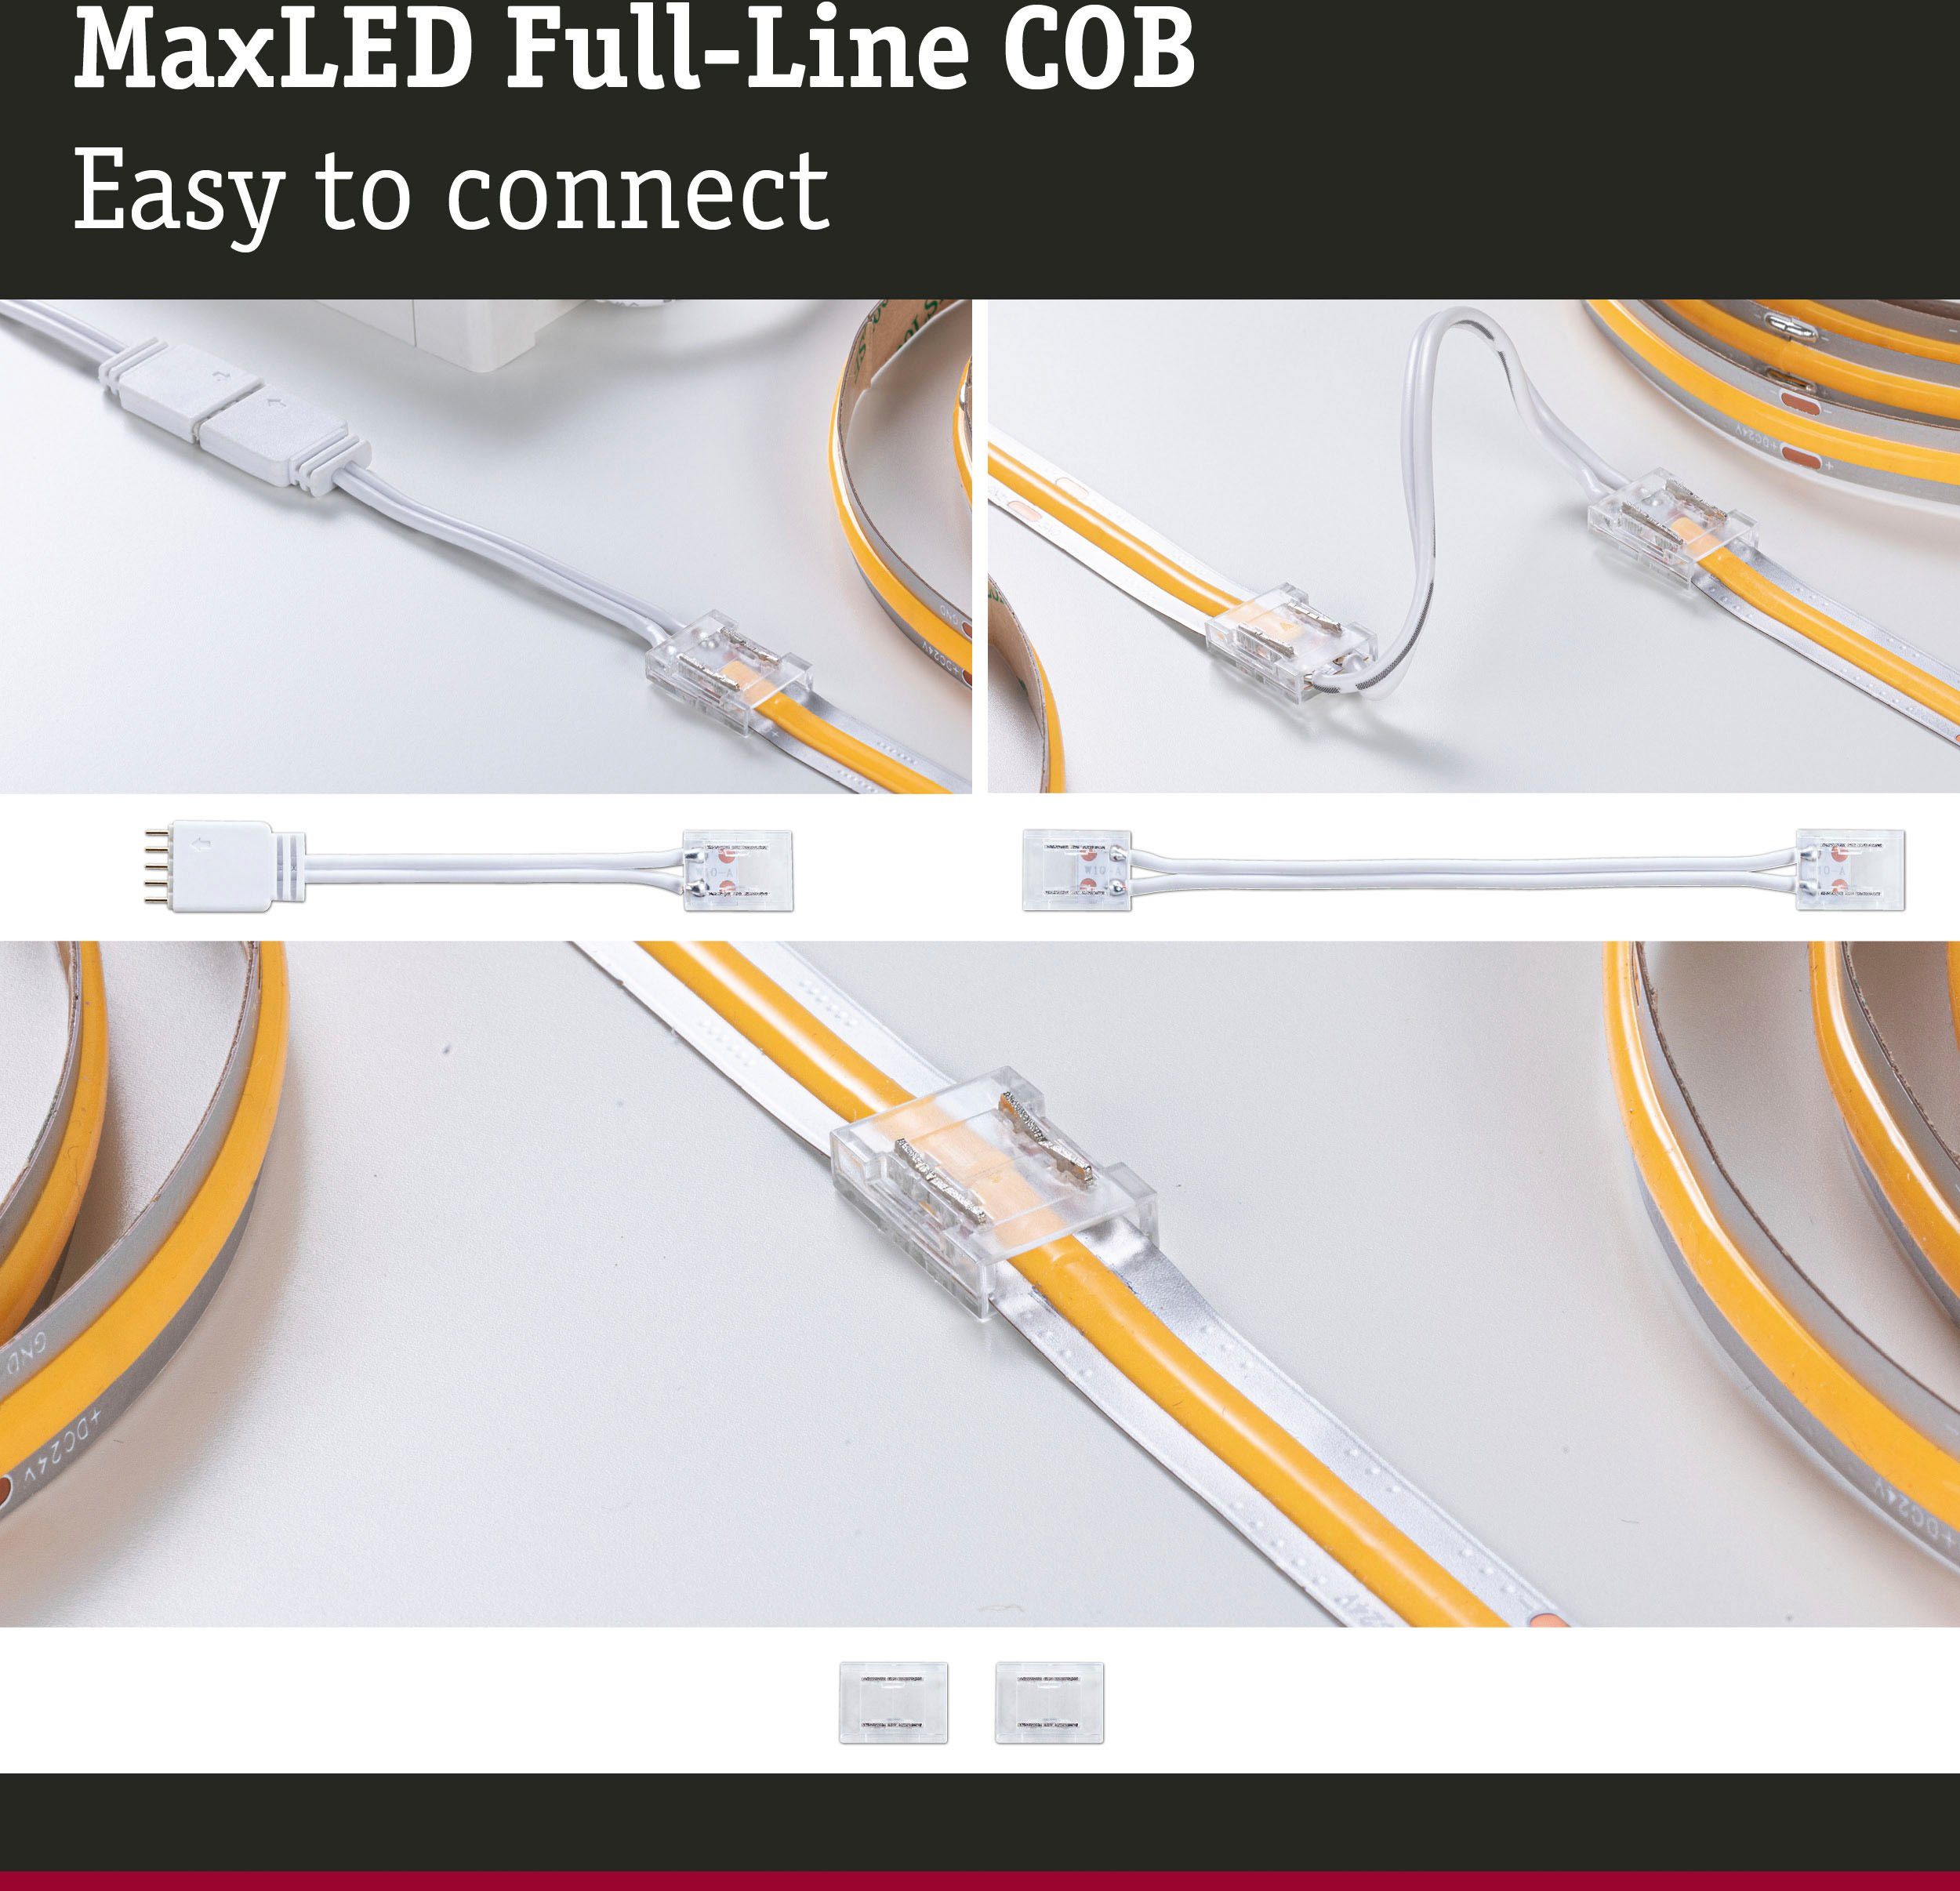 Paulmann LED-Streifen COB 2er-Set MaxLED 1000 133m Full-Line Connector Set